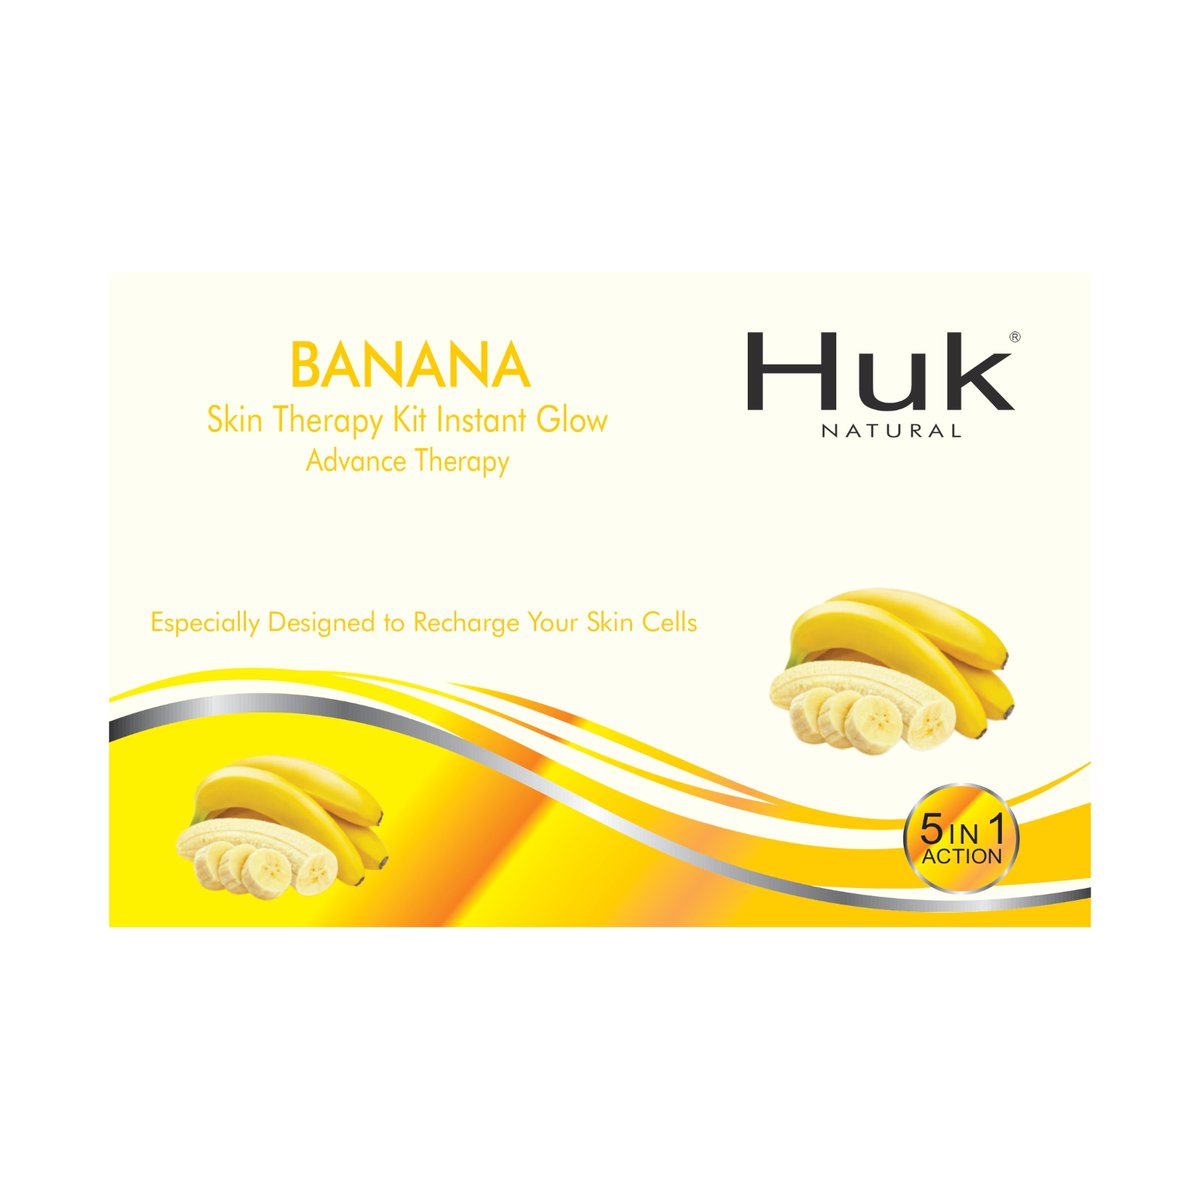 Huk banana facial kit #huk #banana #facialkit